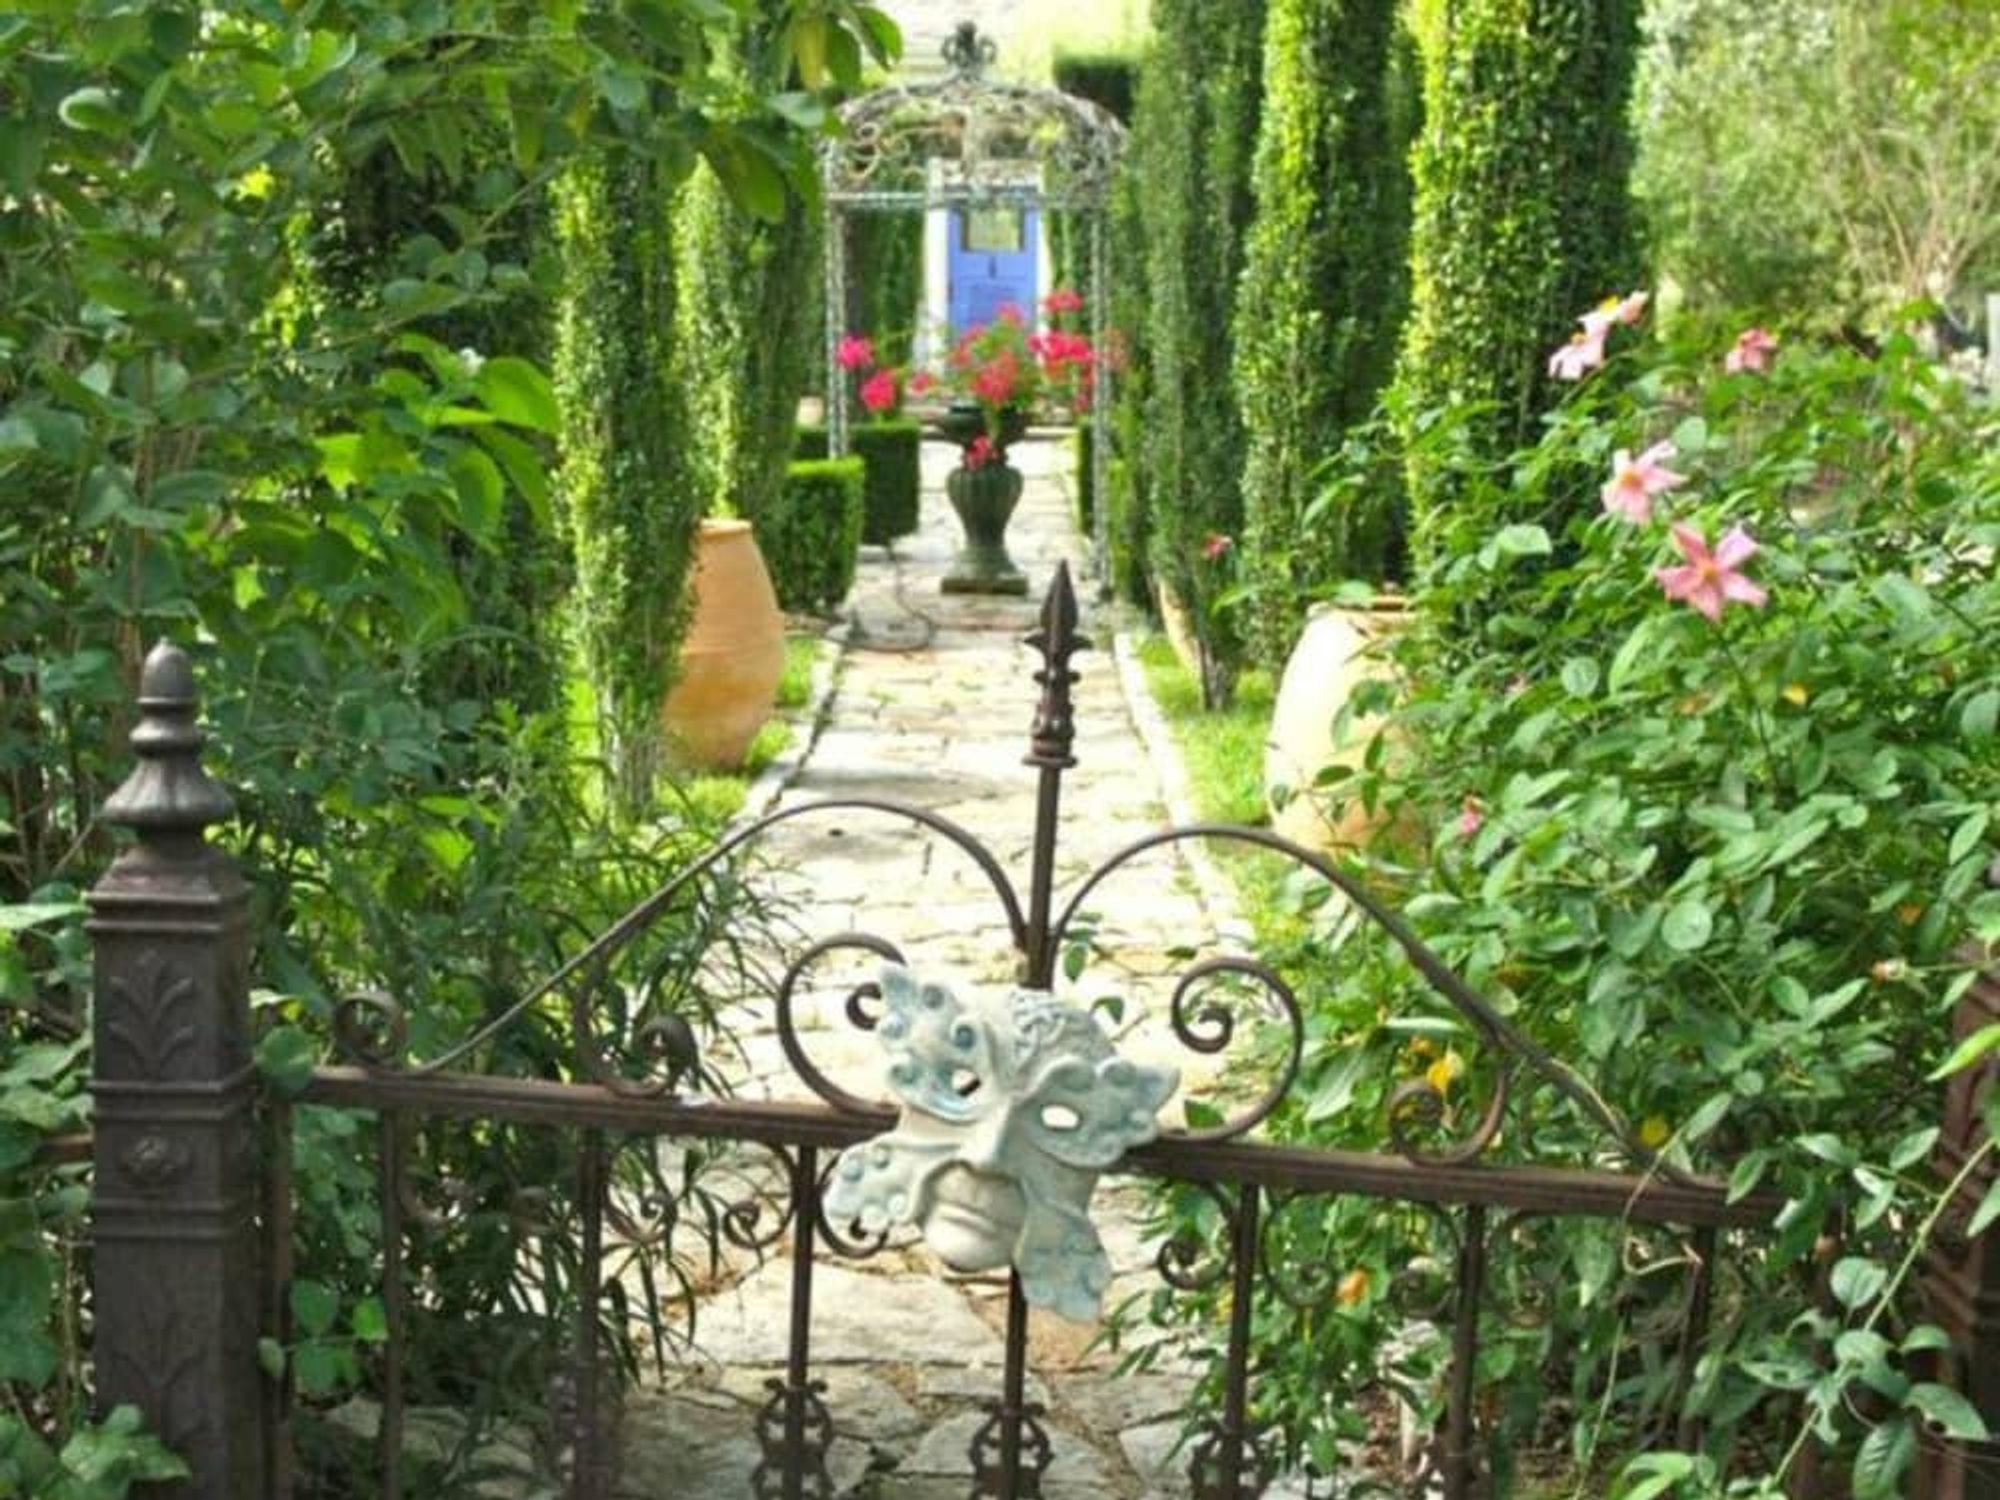 Jennifer's Gardens